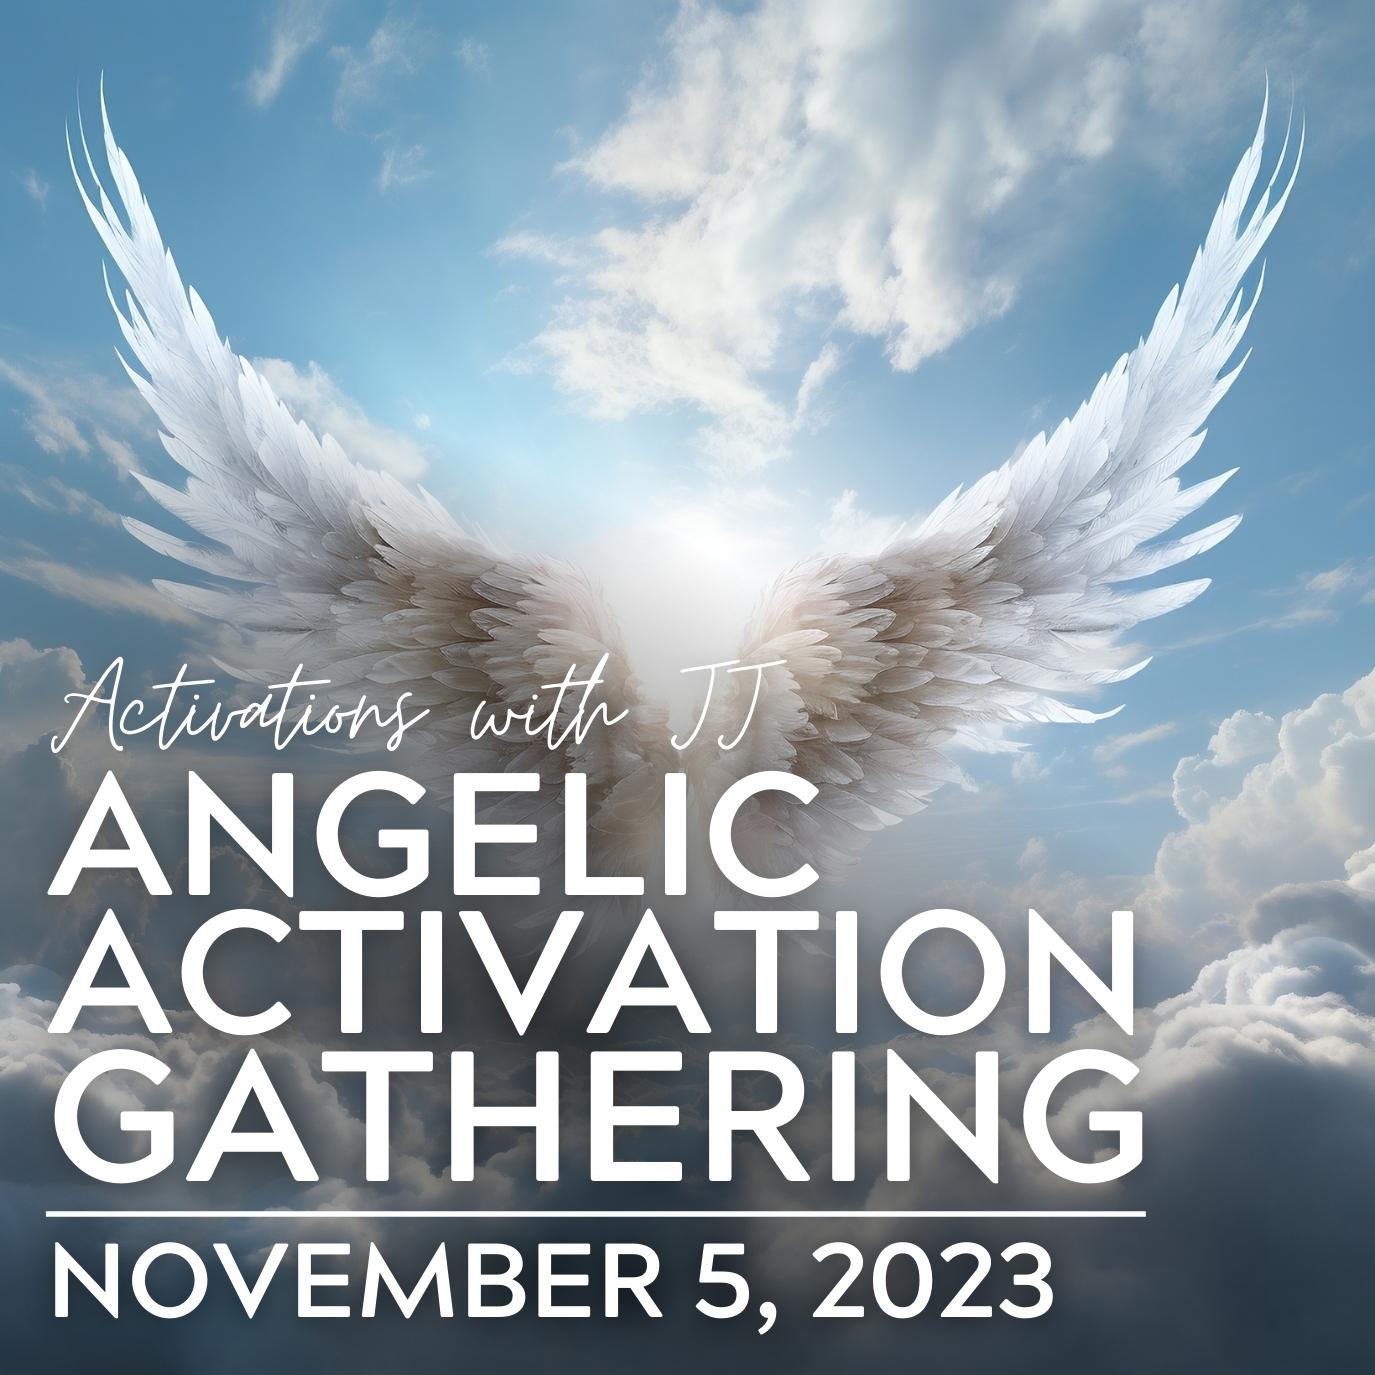 Angelic Activation Gathering (MP3 Recording) | November 5, 2023